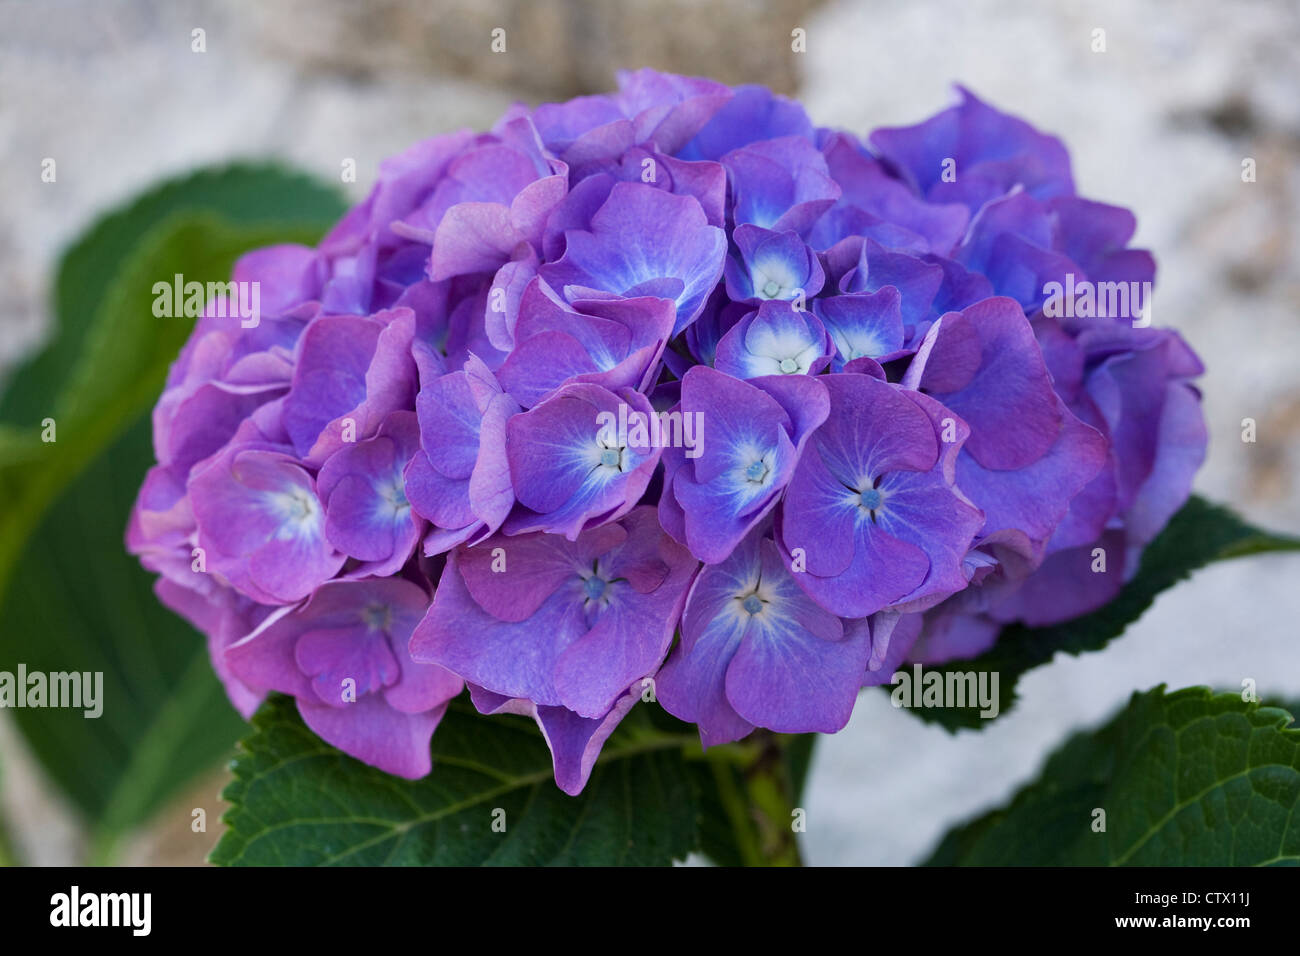 Blue Hydrangea flower against a stone wall. Stock Photo